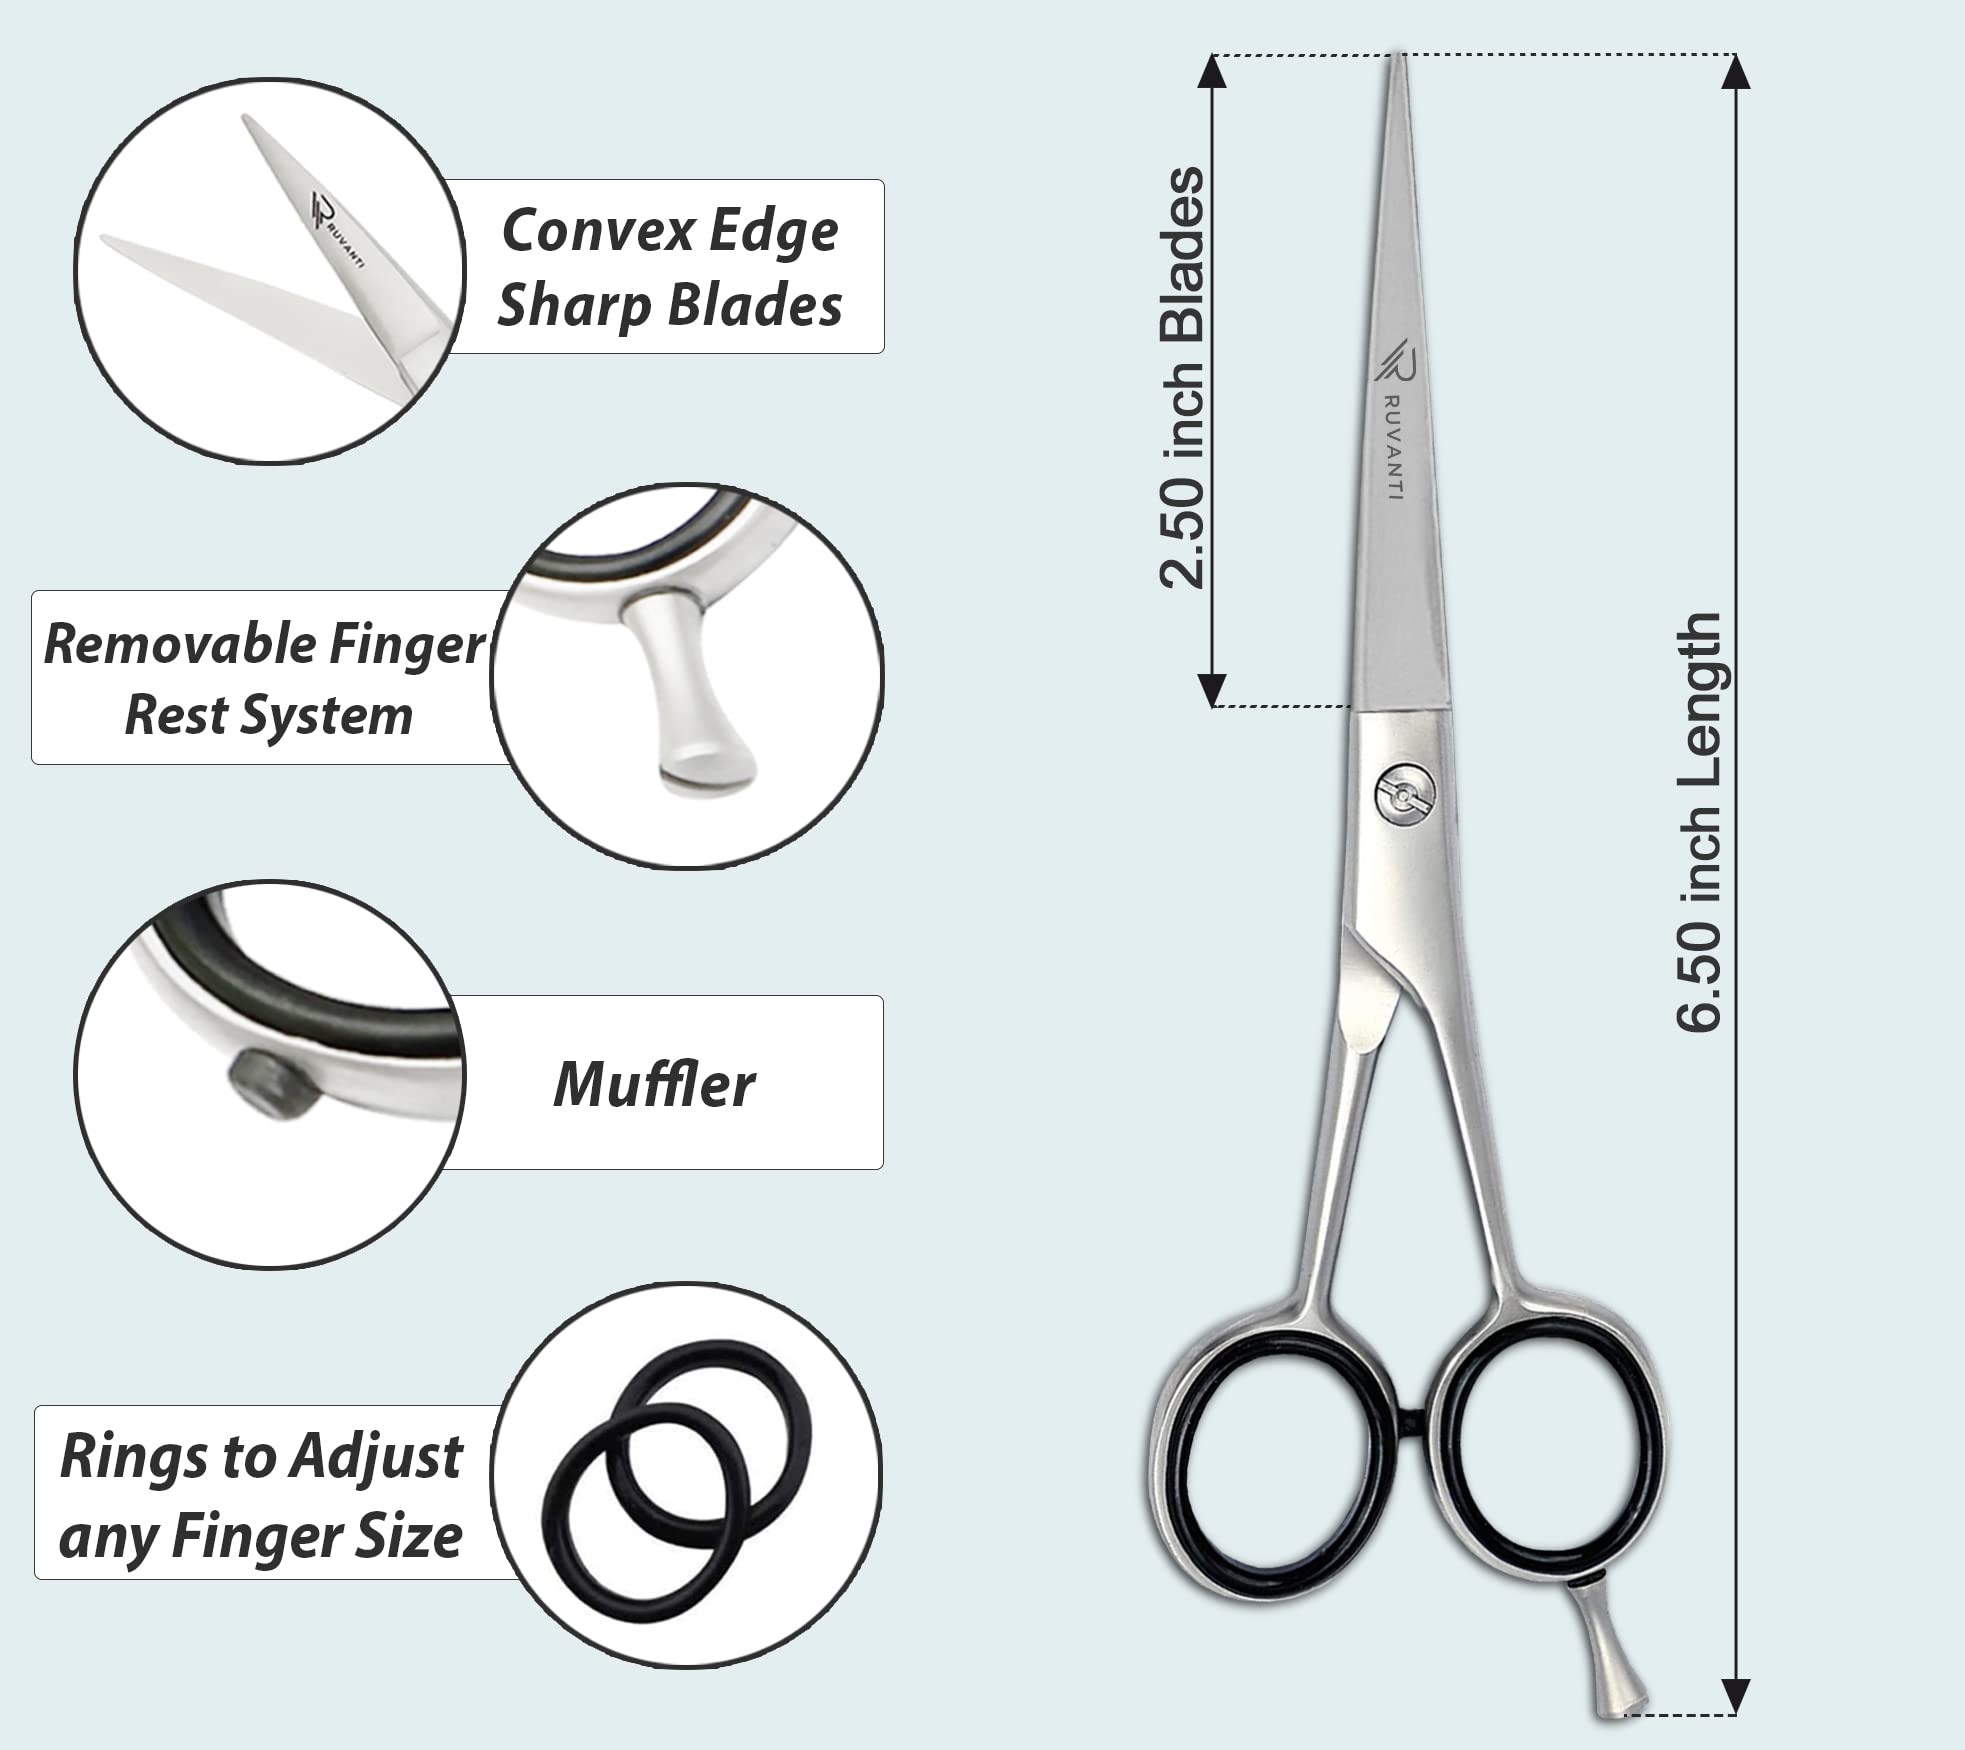 Professional Hair Cutting Scissors - Barber Shears for Salon and Home Use - Sharp Durable Razor Edge Tijeras De Peluqueria Profesional - Comfortable Grip Handles with Case by Ruvanti